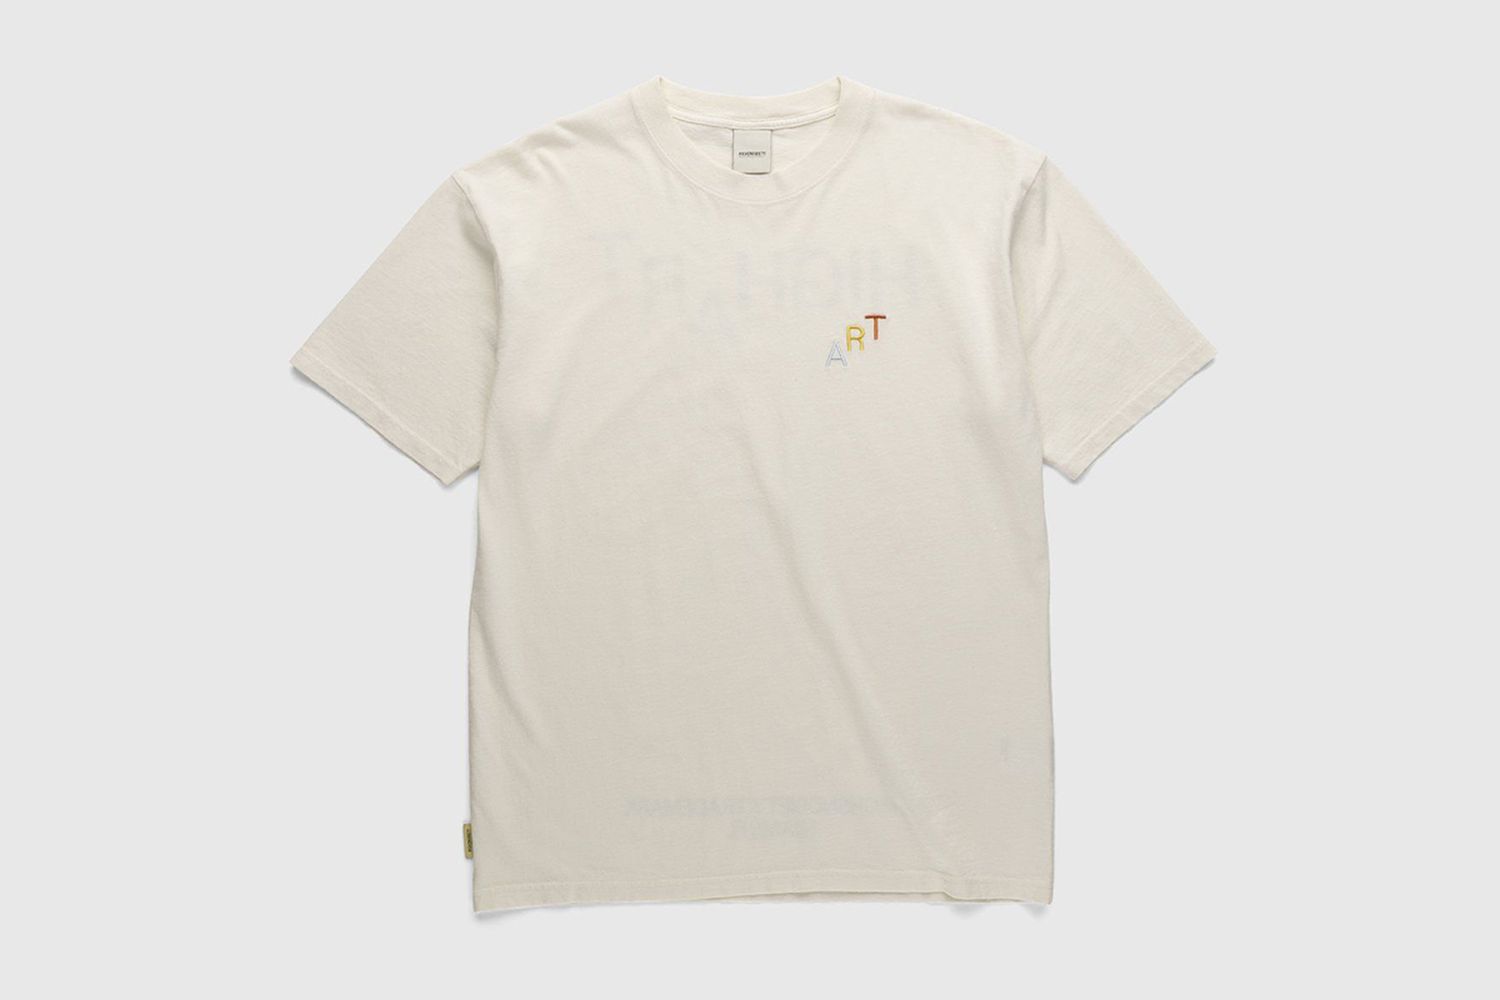 HIGHArt Rainbow T-Shirt